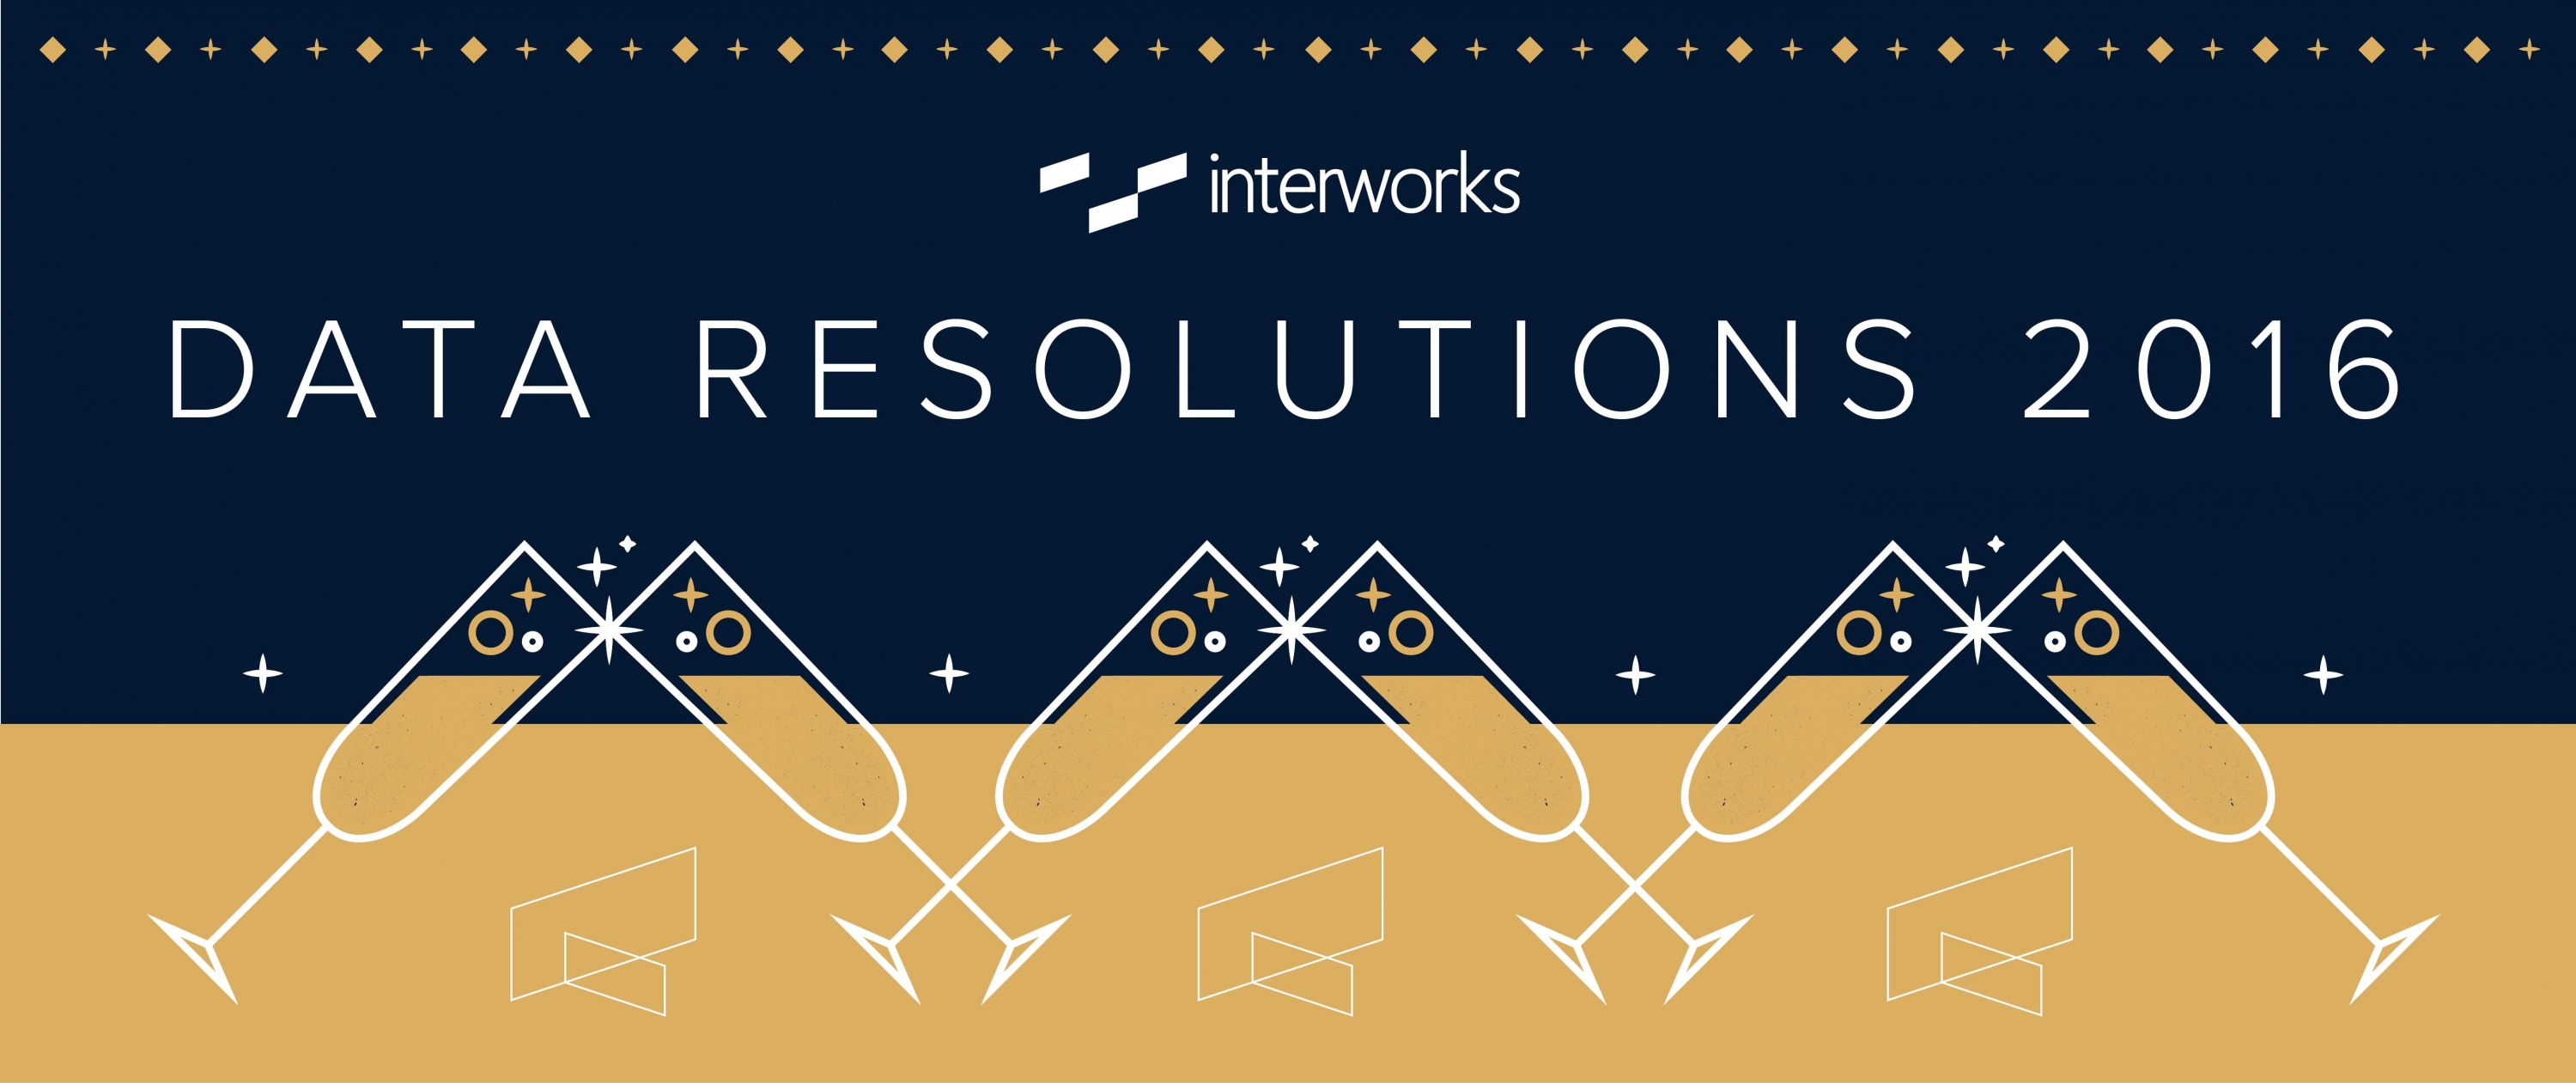 InterWorks' New Year's Data Resolutions 2016